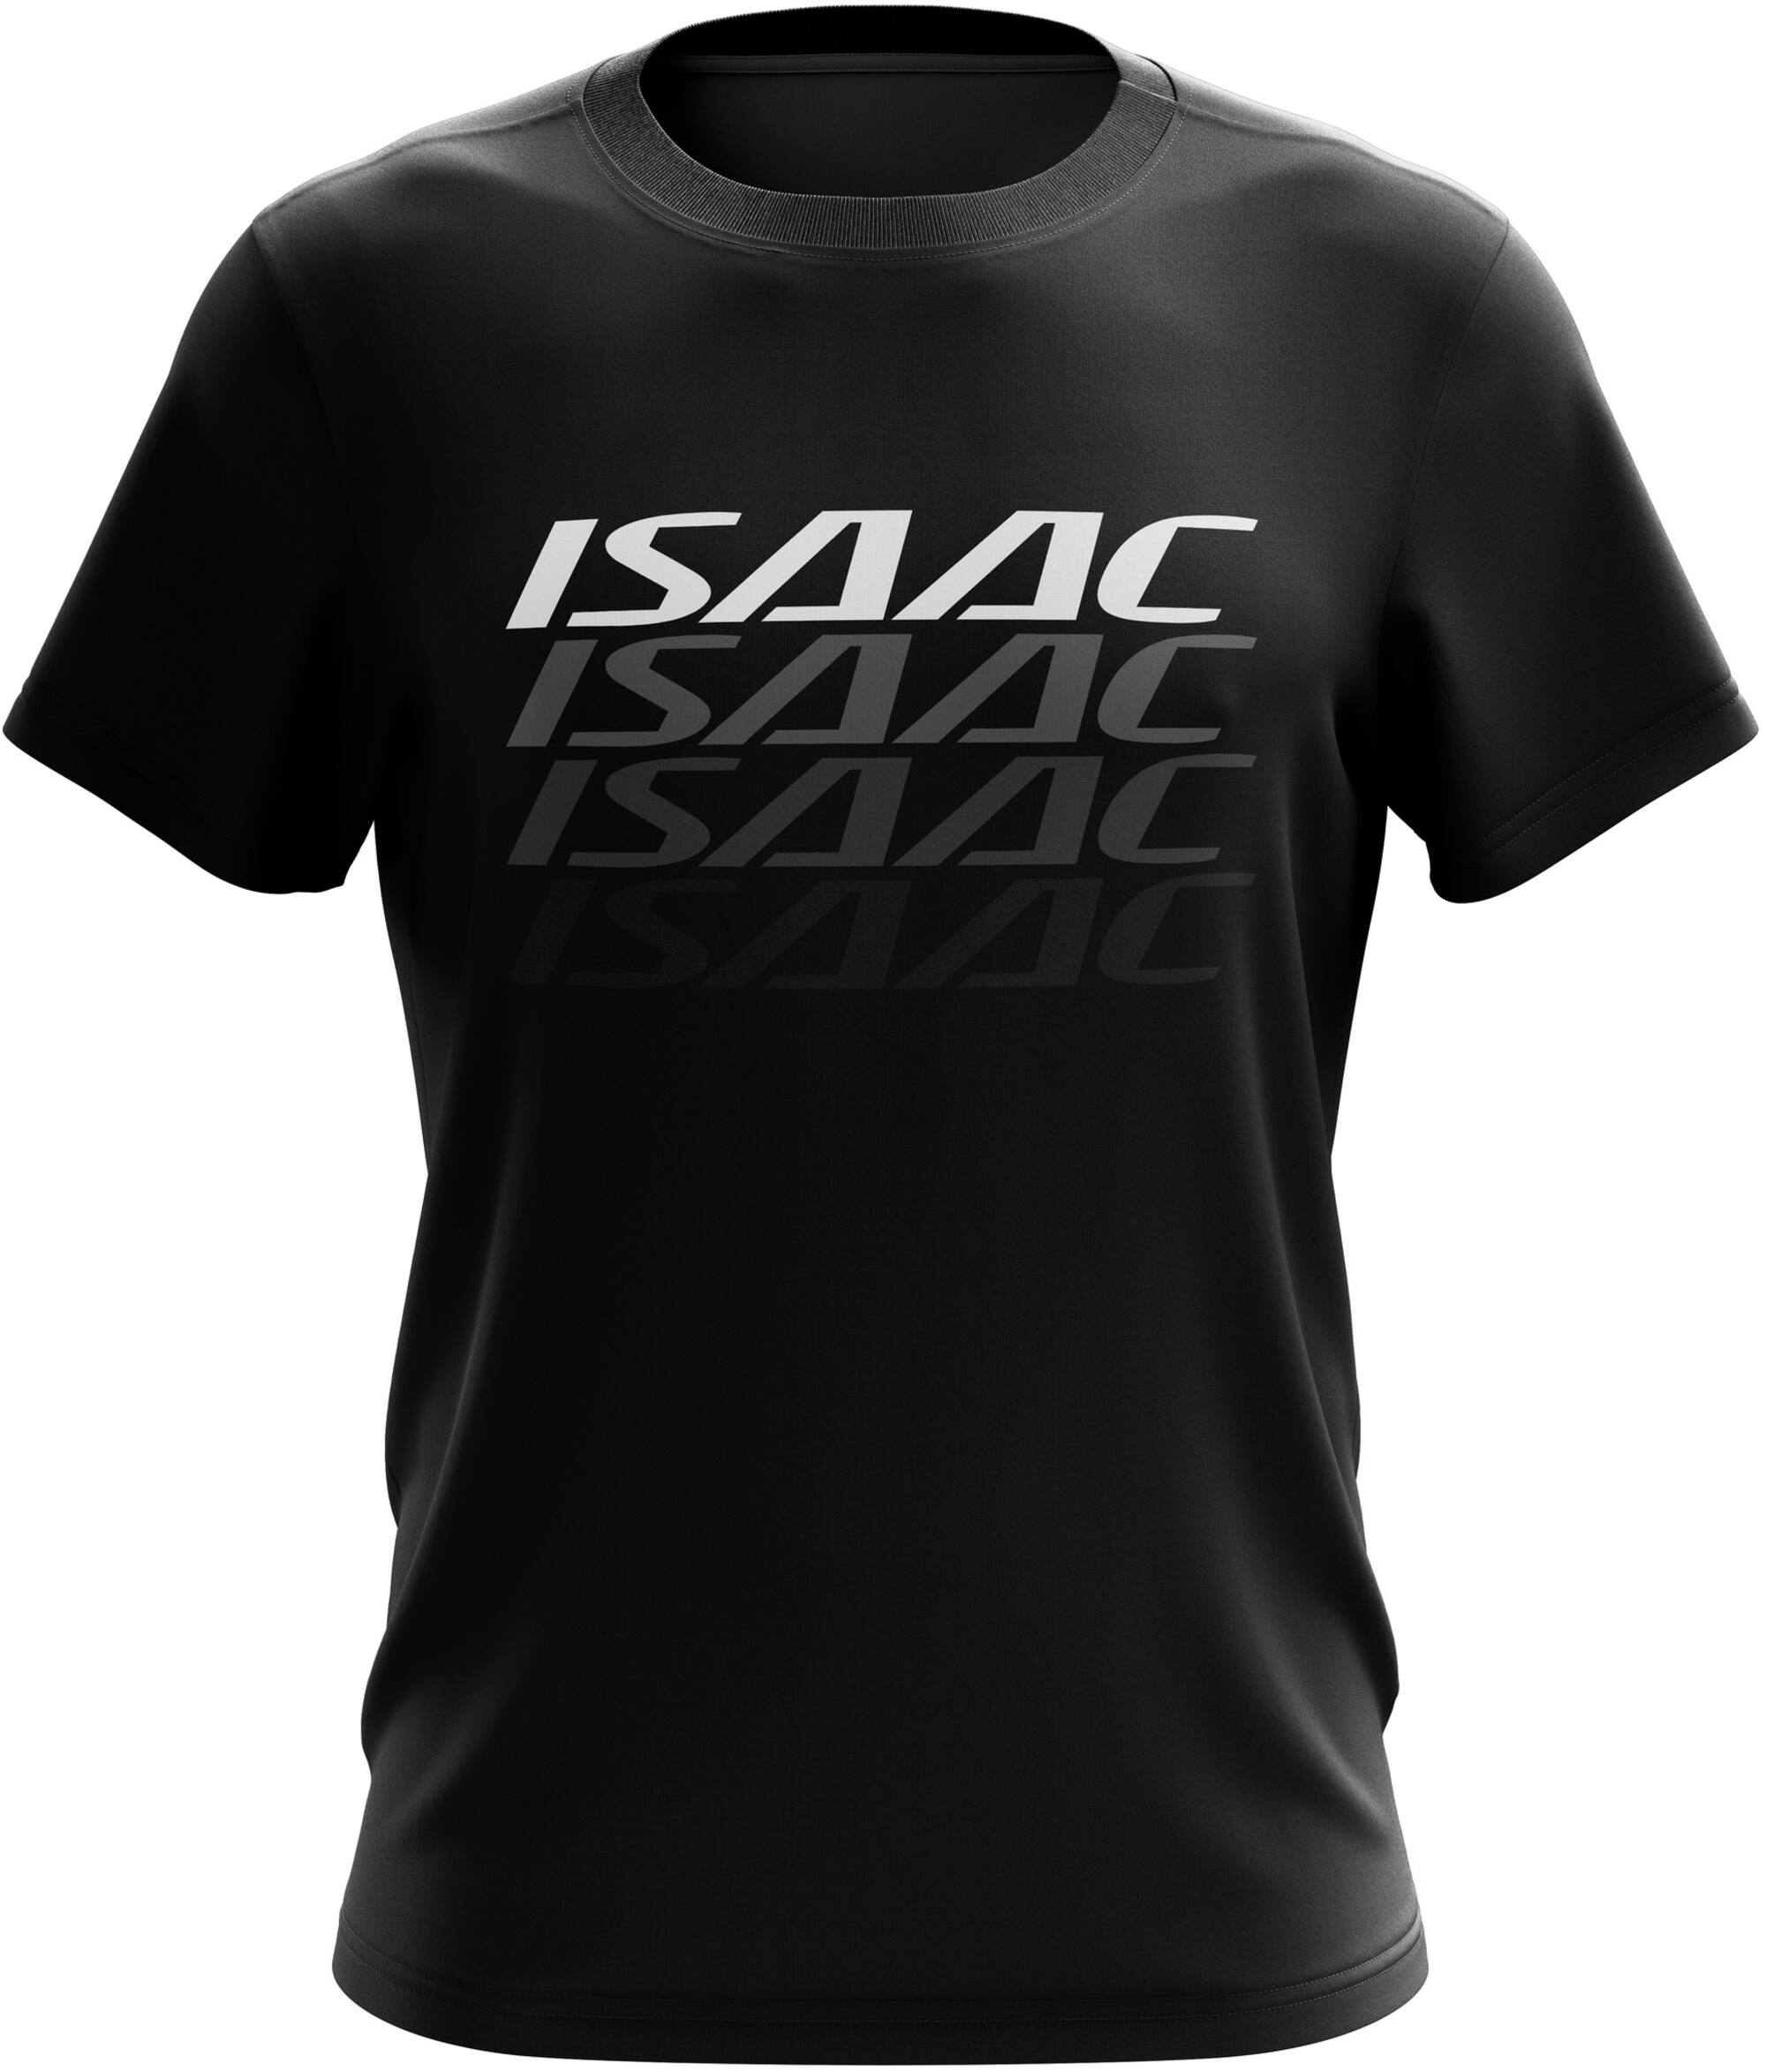 ISAAC T-SHIRT CASUAL MAAT S